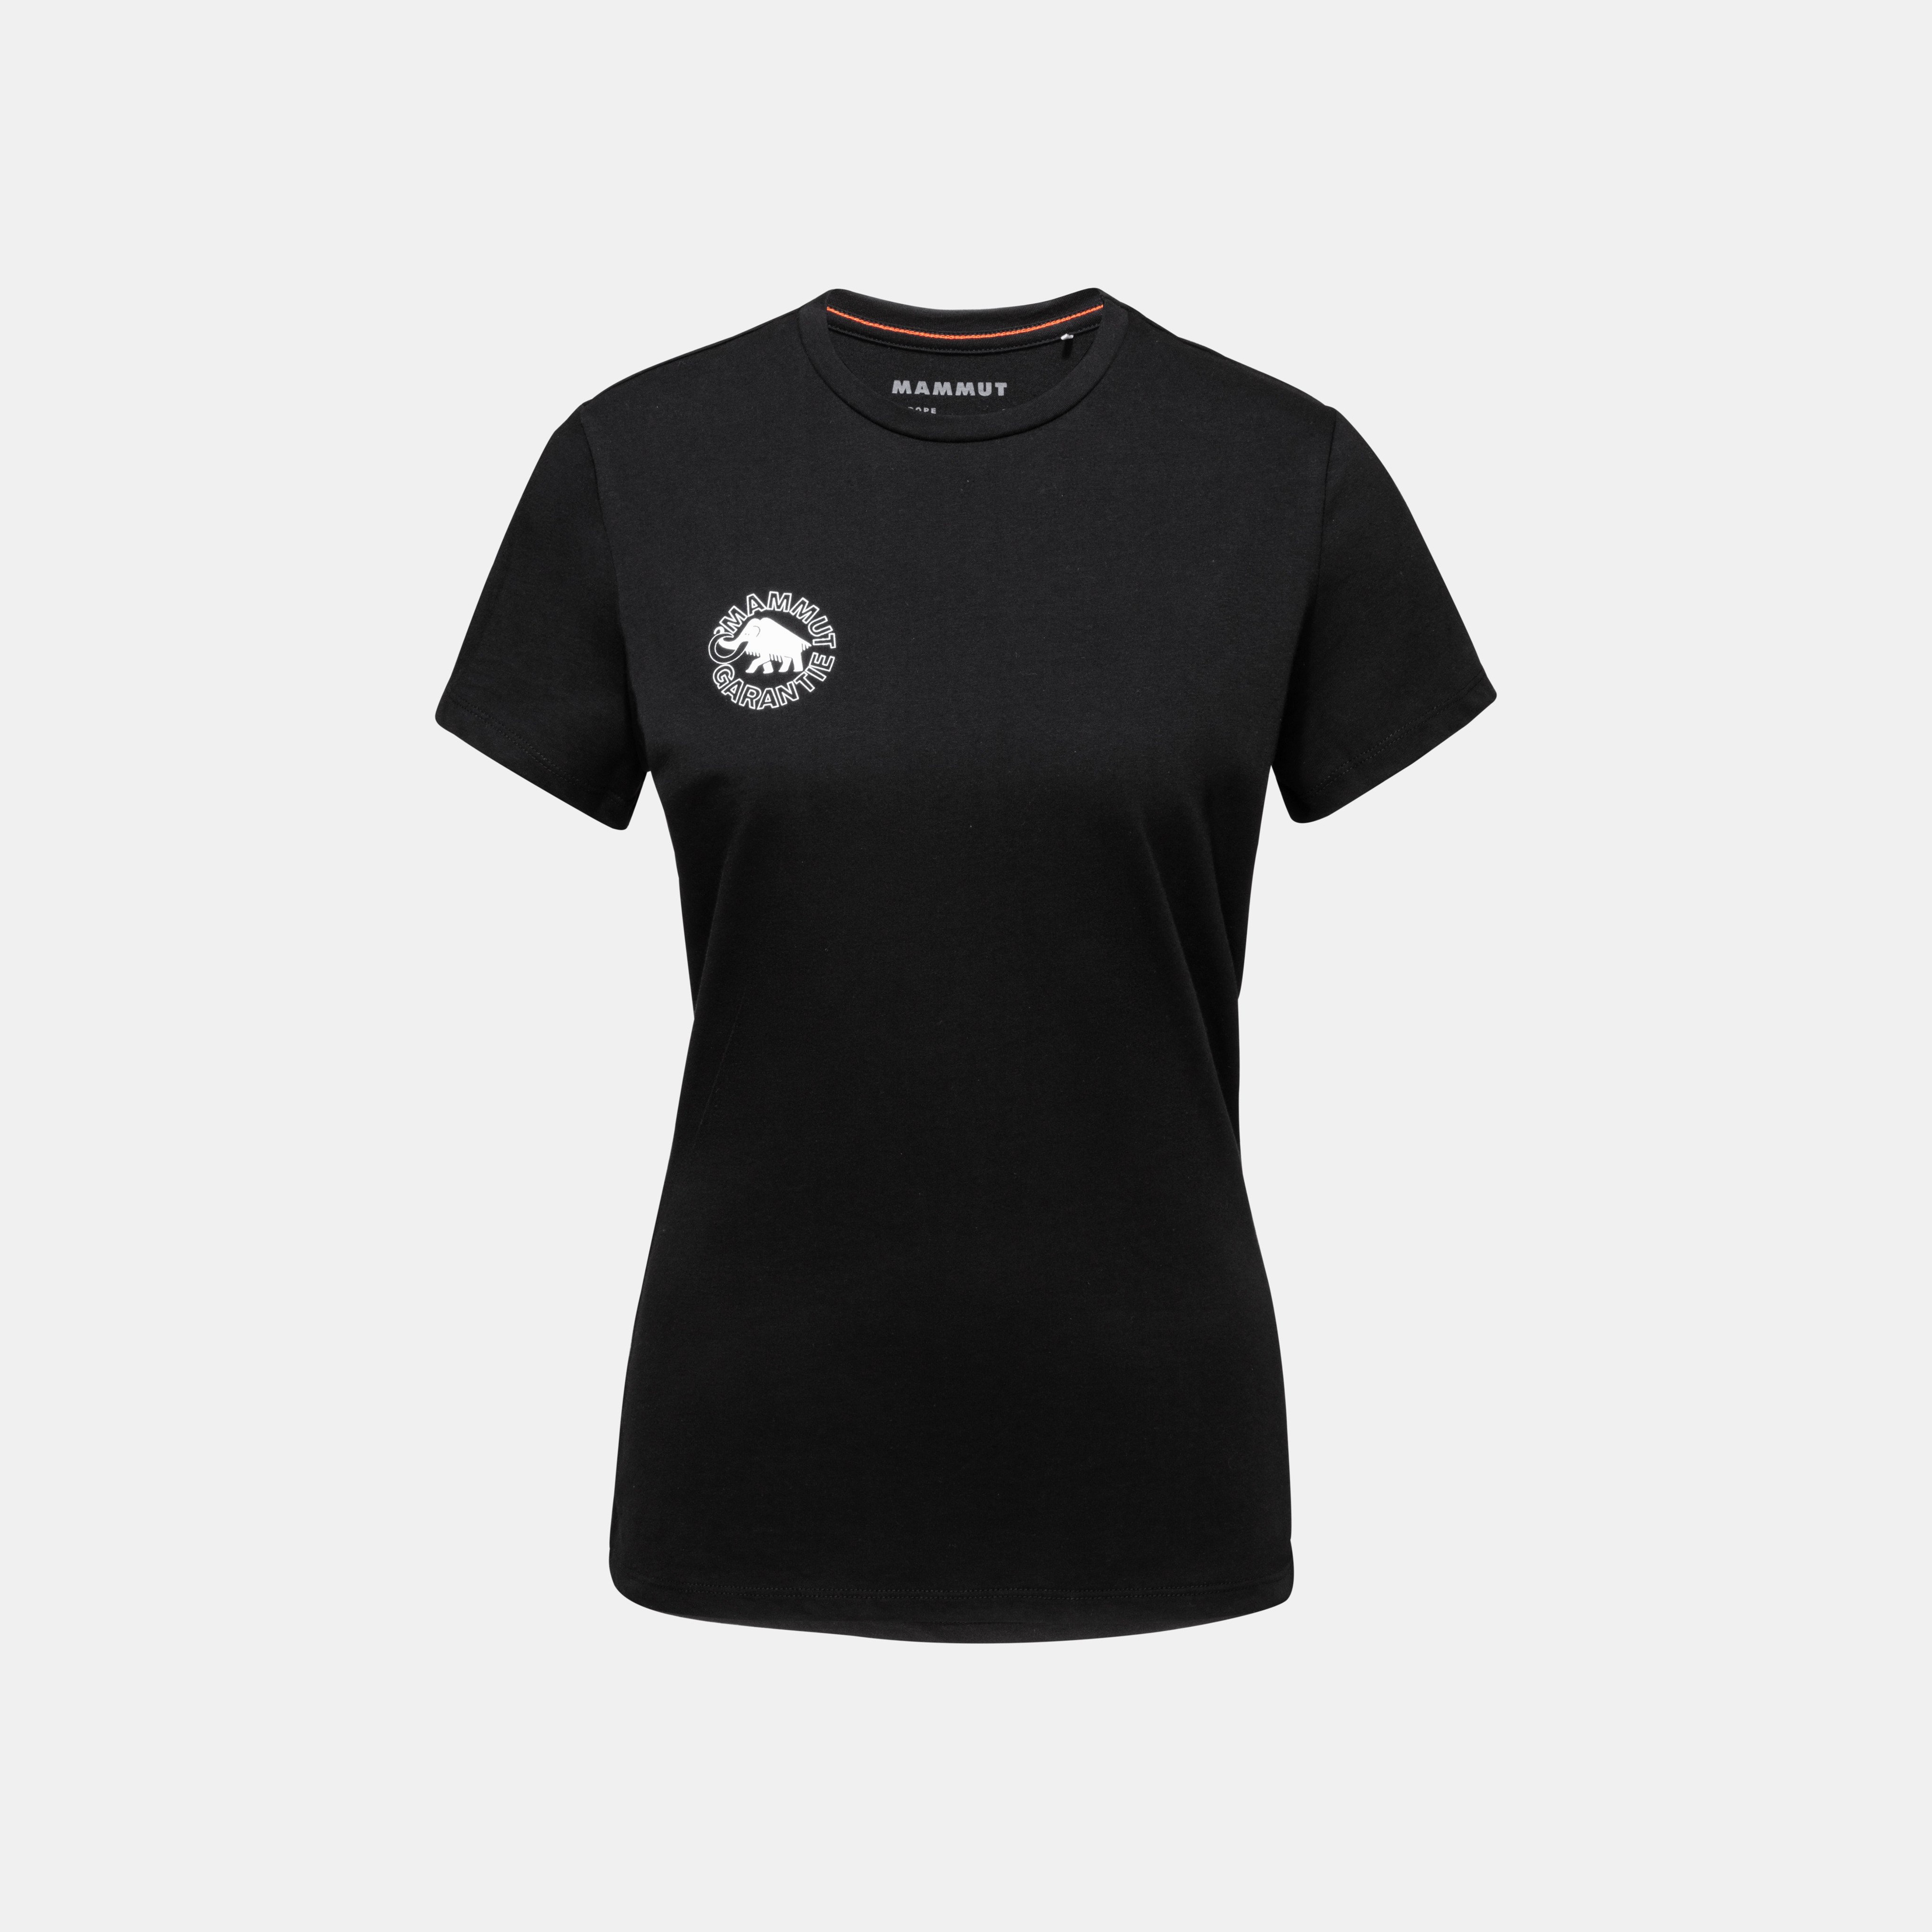 Seile T-Shirt Women Heritage product image